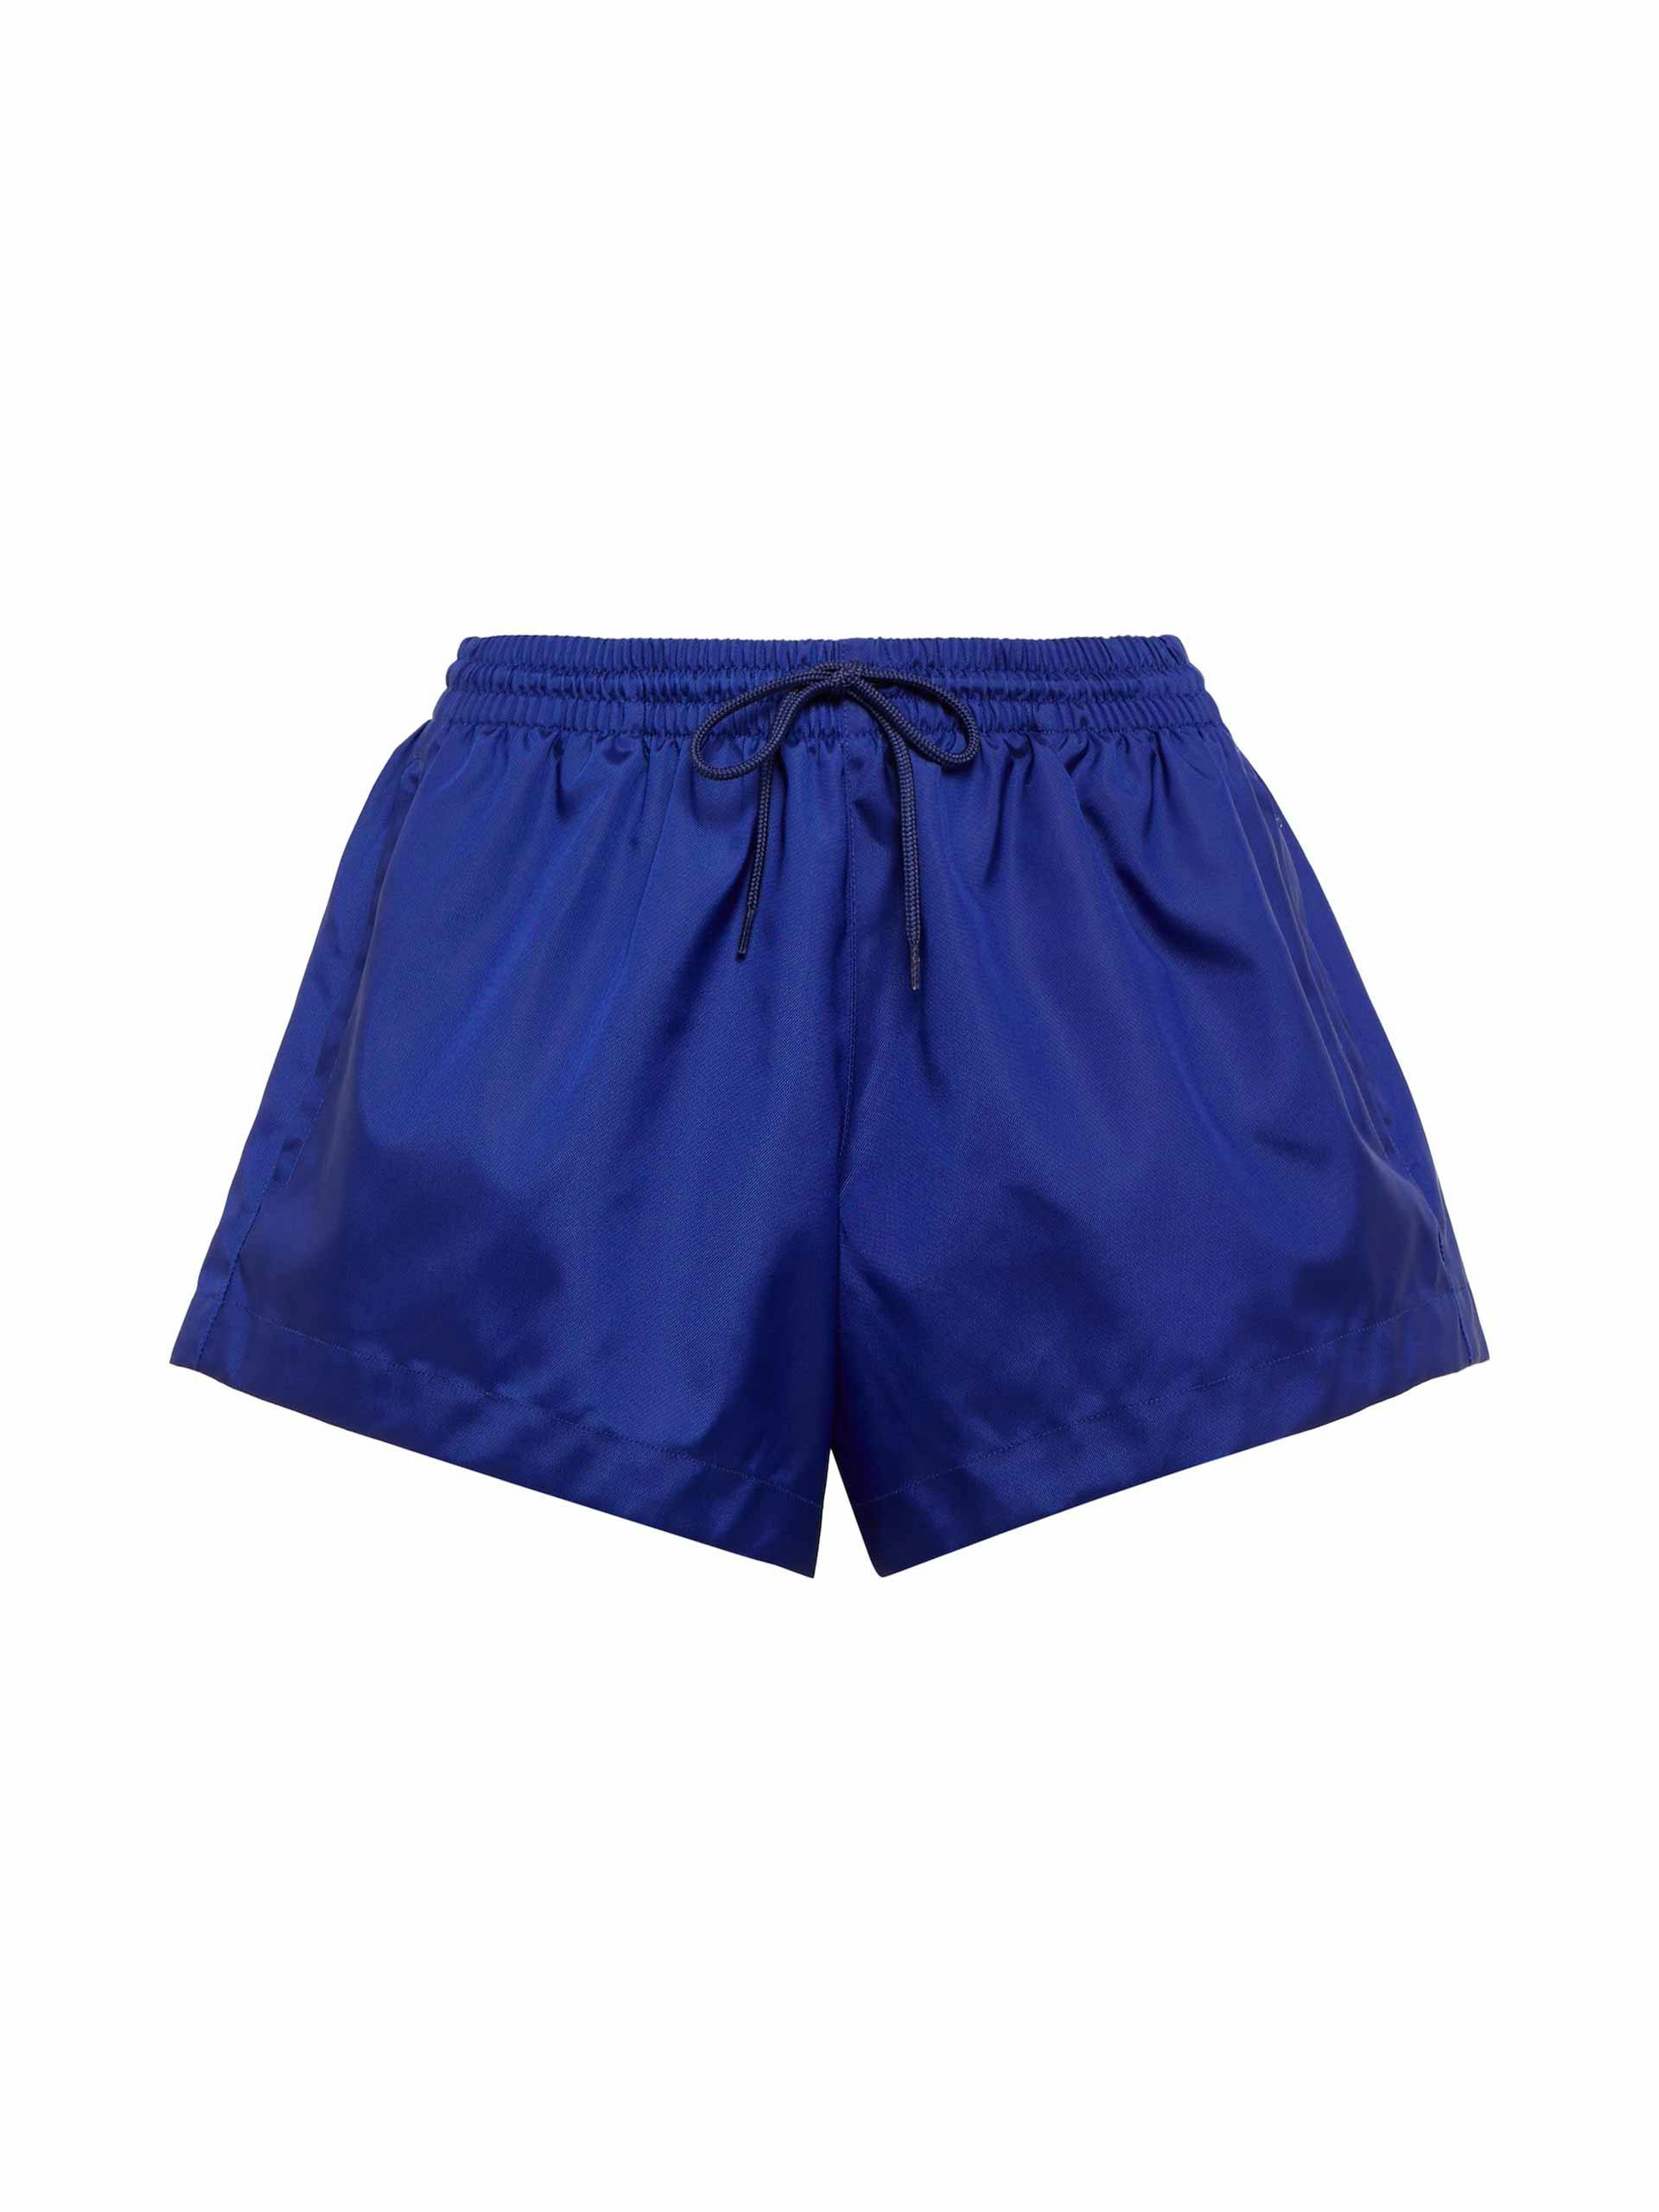 Blue nylon shorts